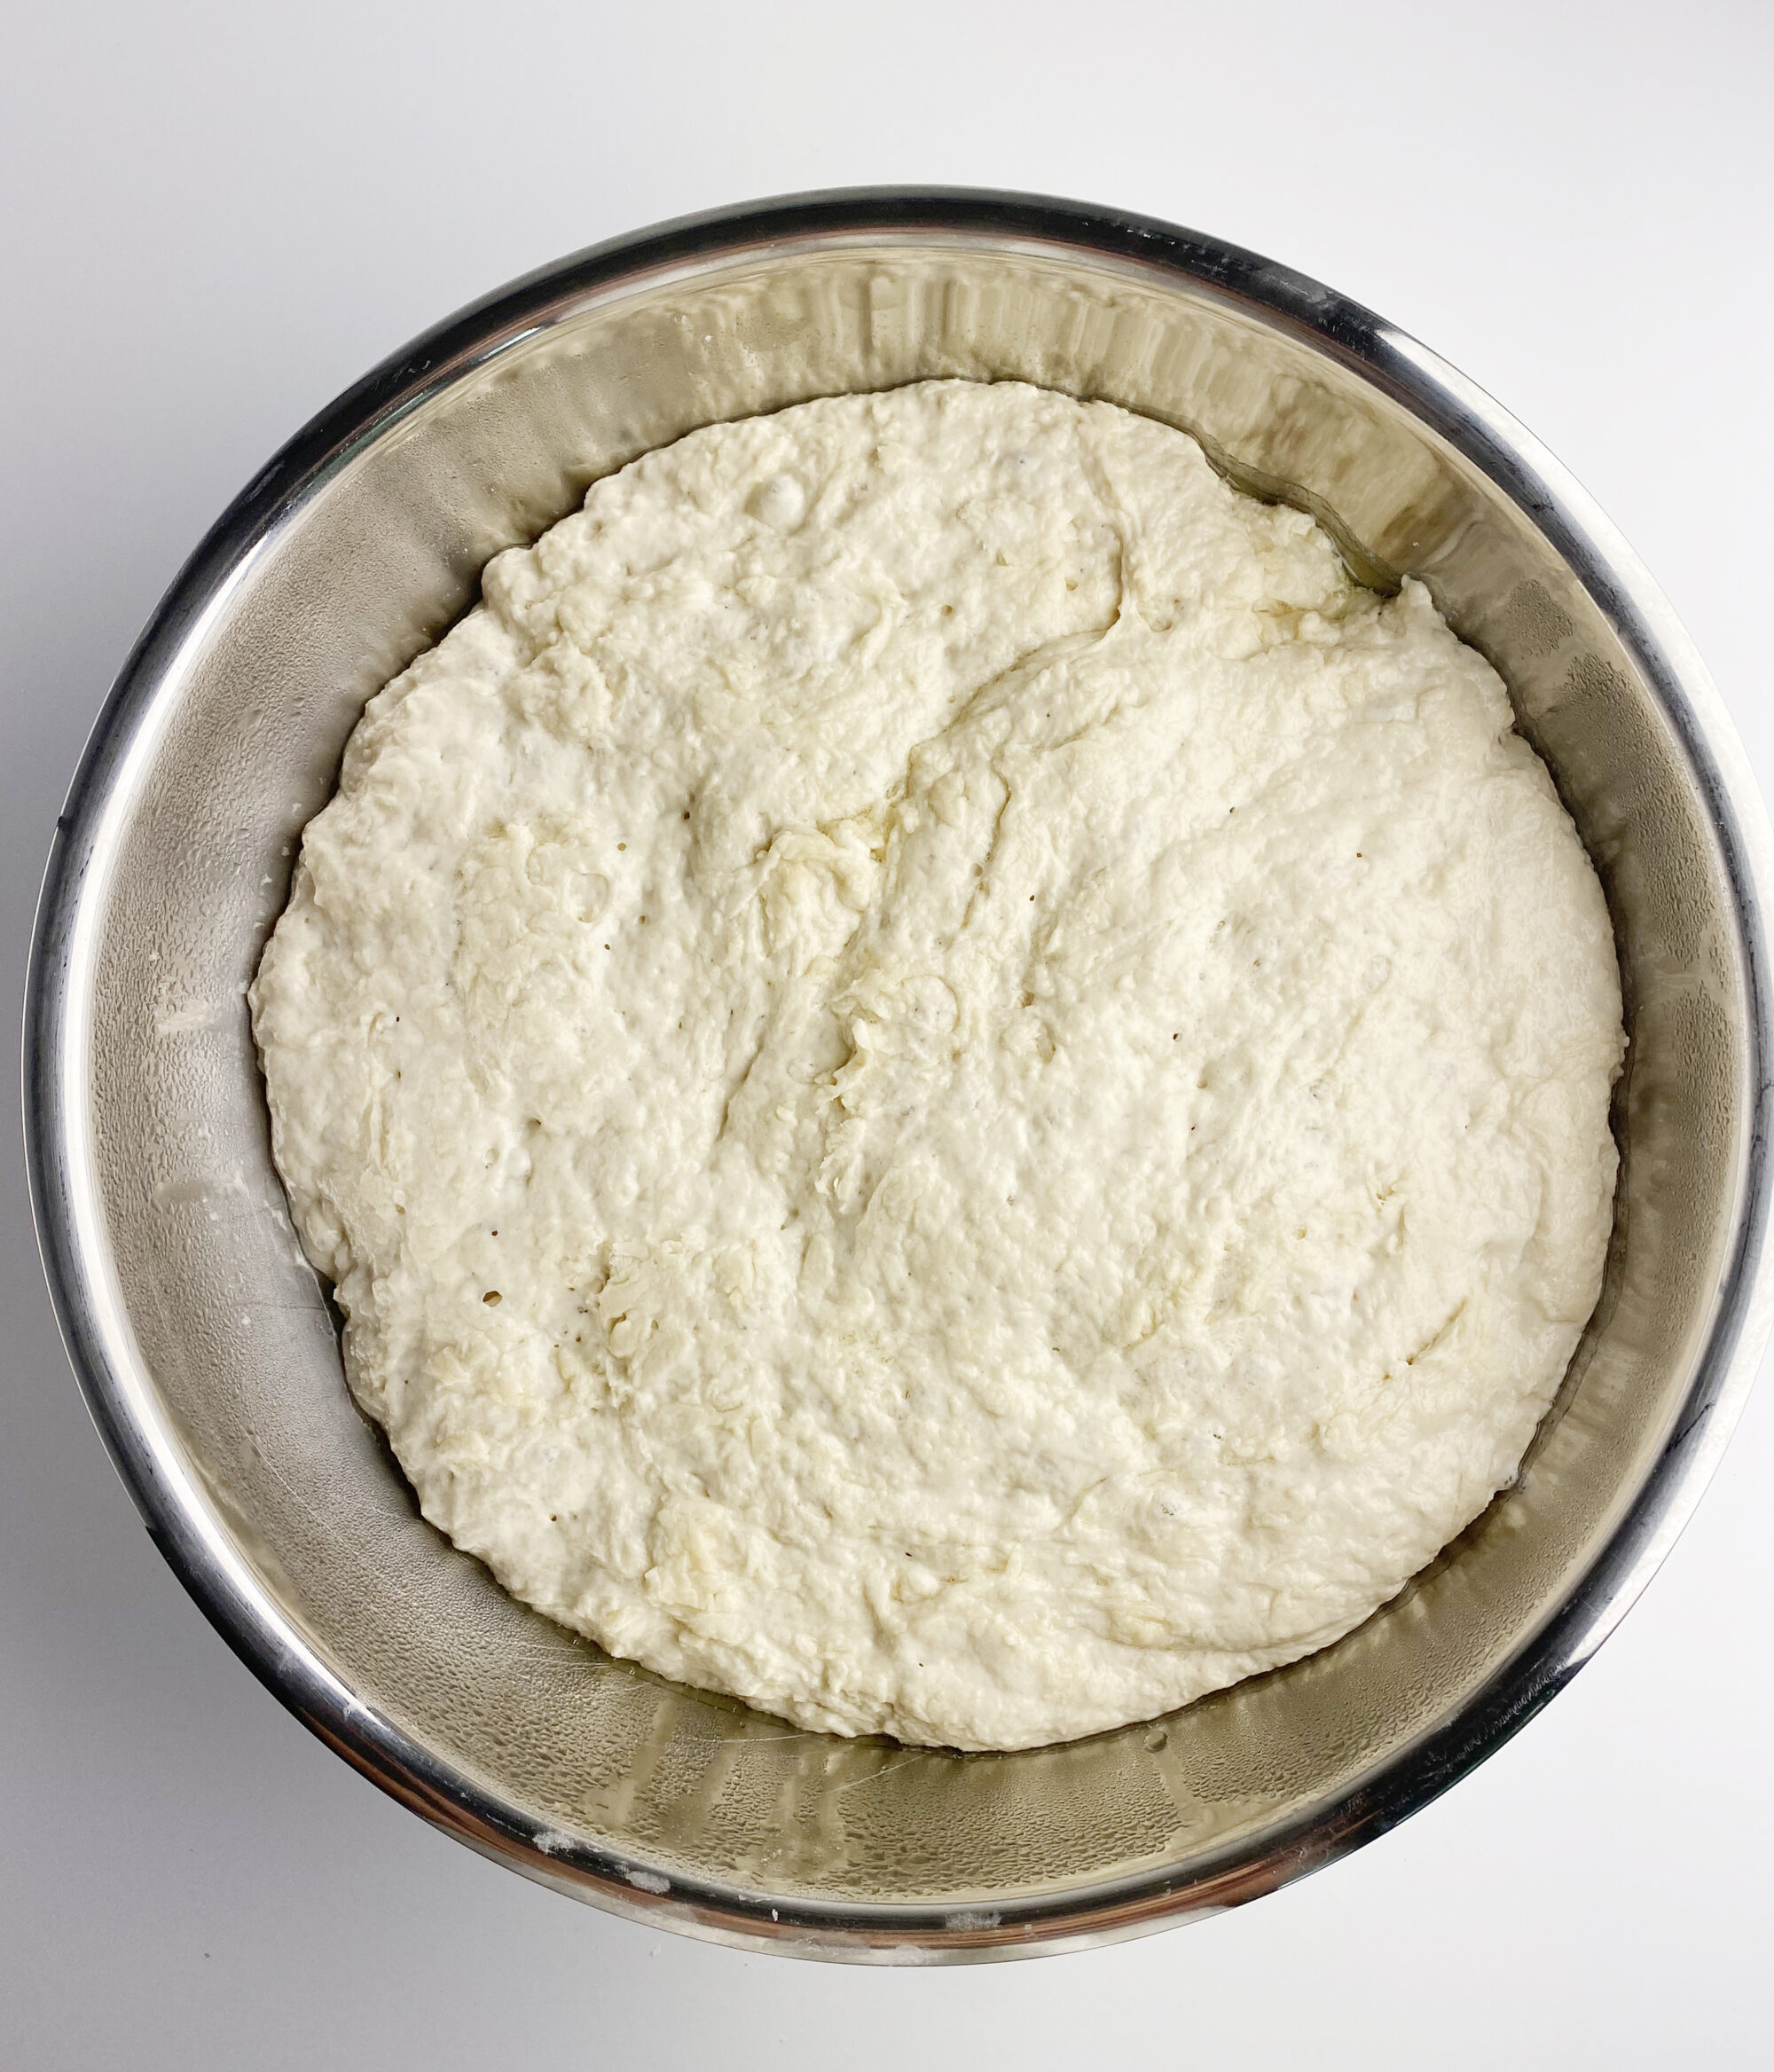 Focaccia dough first rise in a metal bowl.